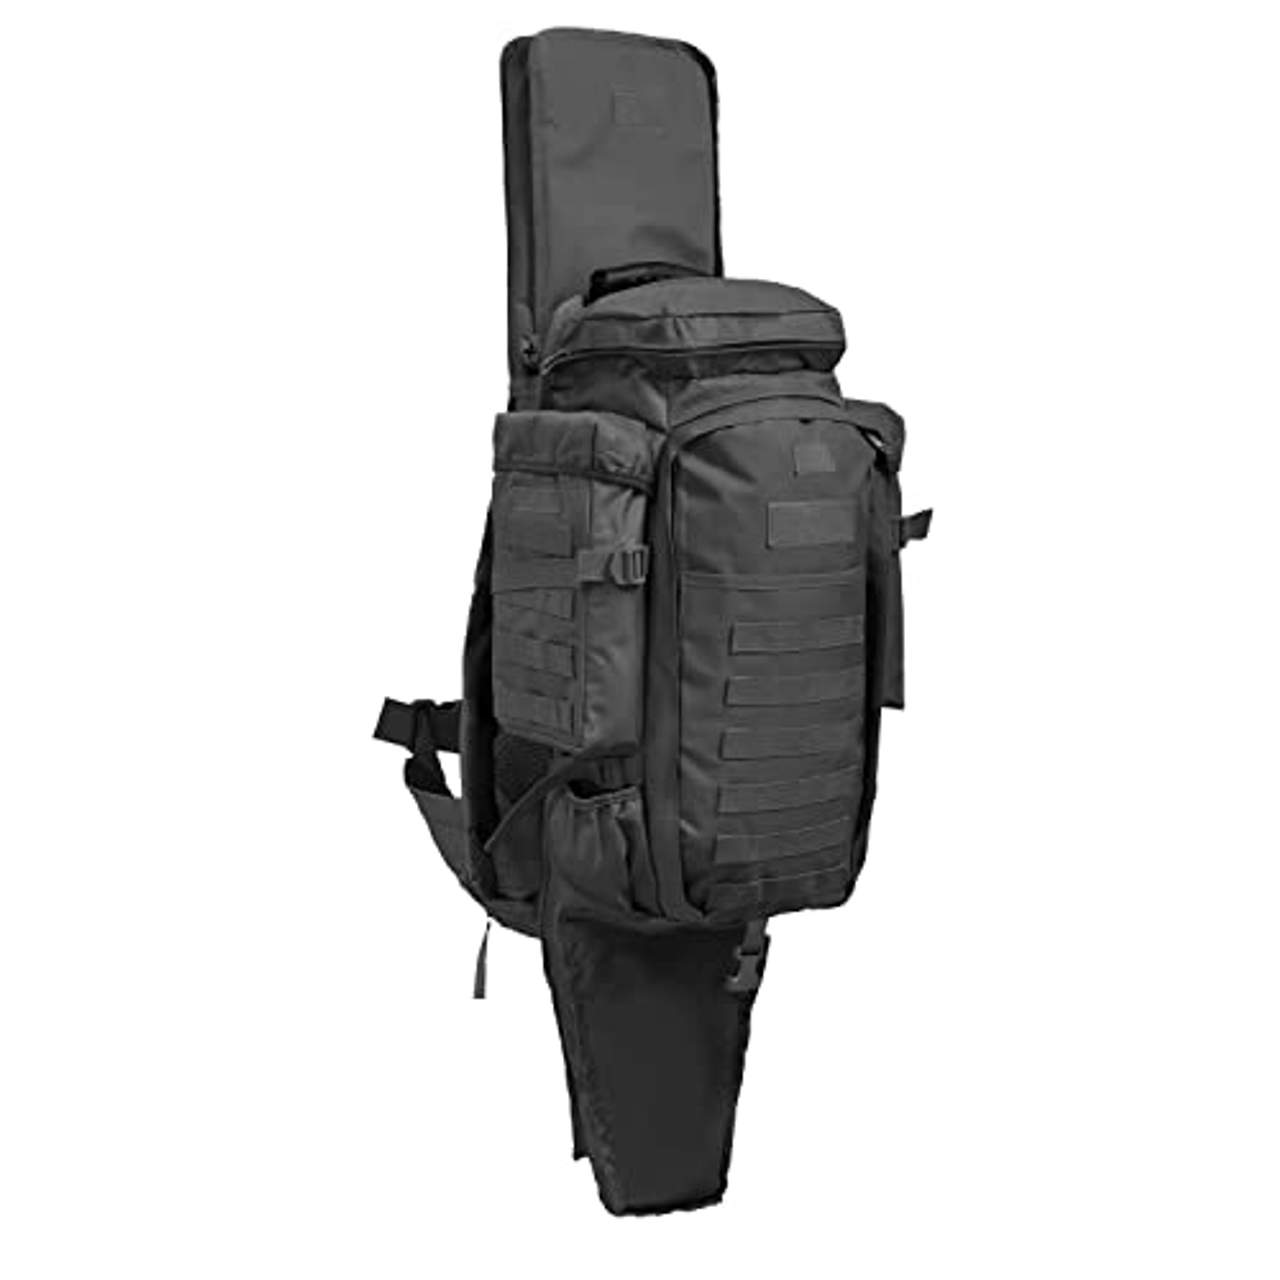 Gespann Tactical Rifle Bag Molle Hunting Backpack Military Rucksacks